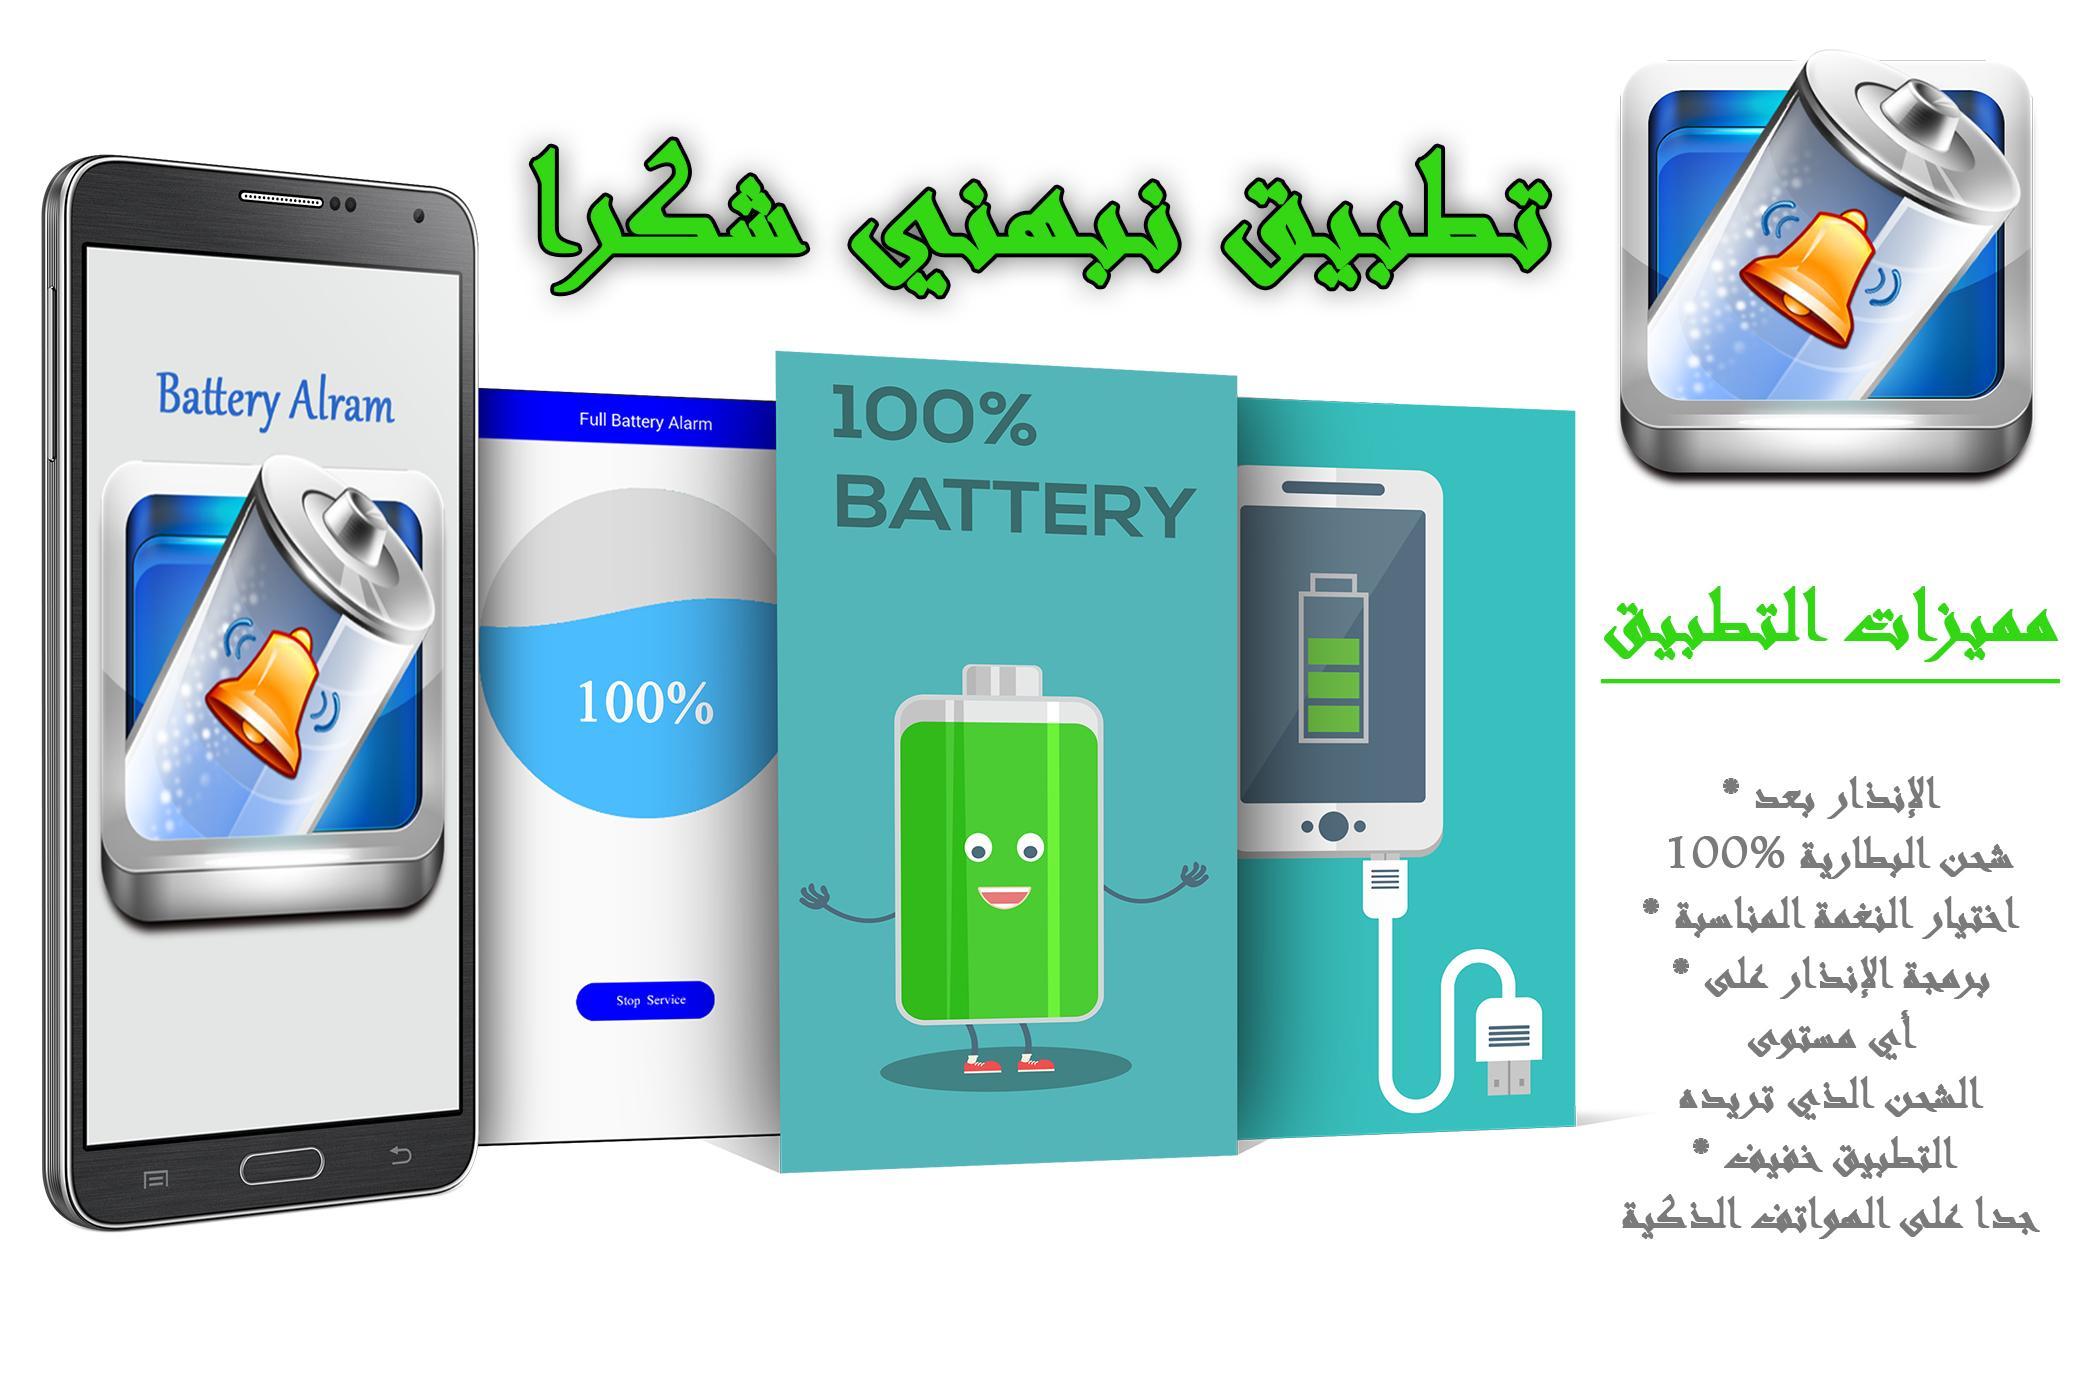 Battery alarm. Батарейка Alarm. Full Battery Android. Battery 100% Alarm v3.1.14 (Pro).